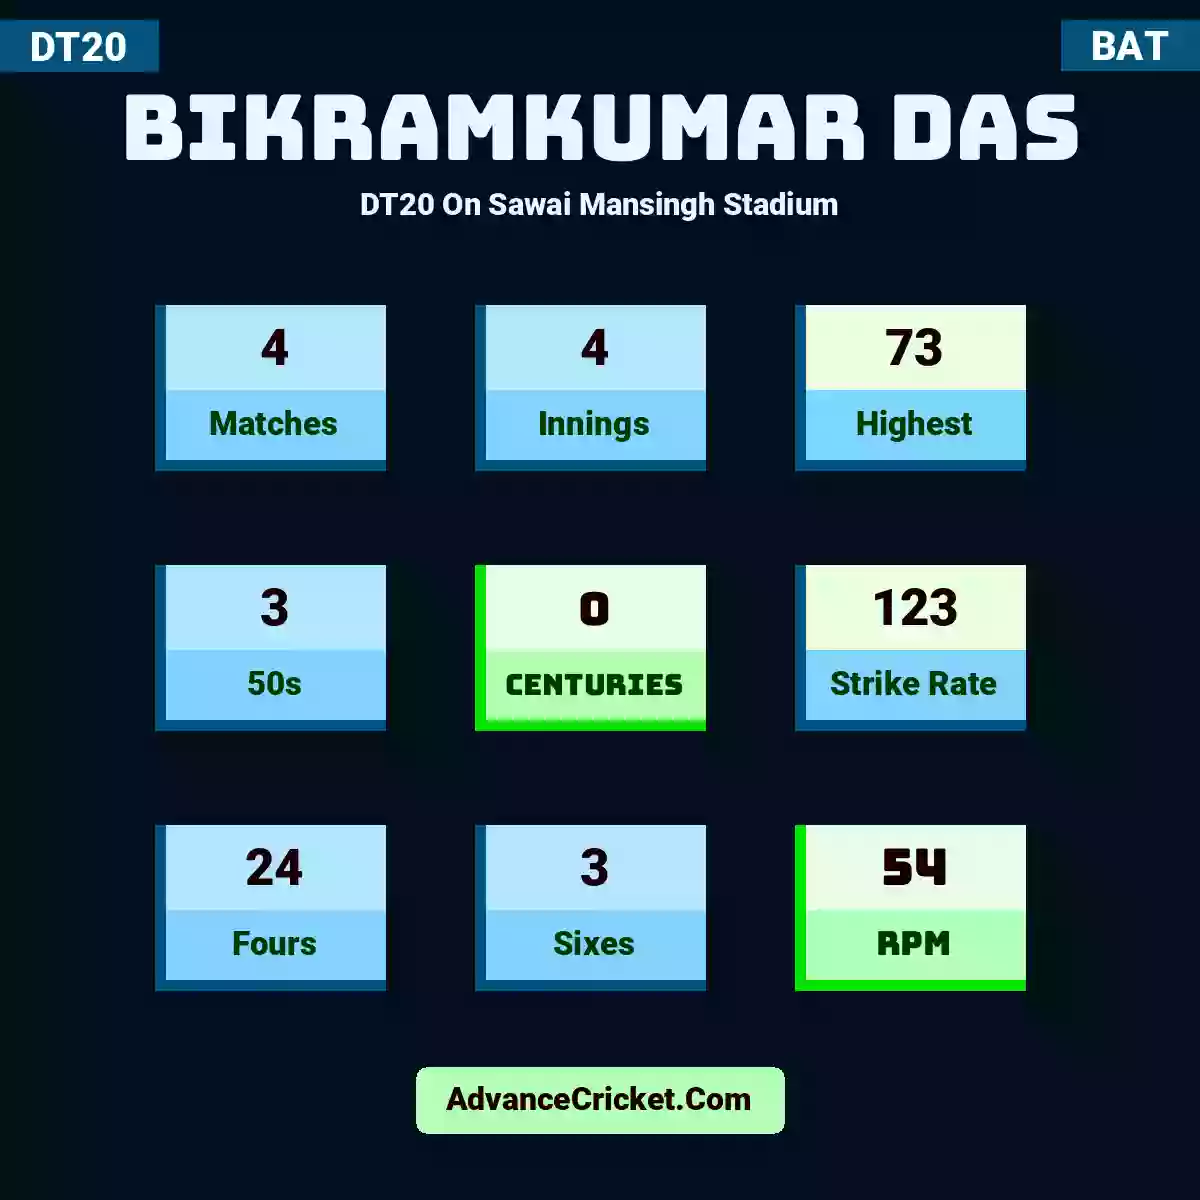 Bikramkumar Das DT20  On Sawai Mansingh Stadium, Bikramkumar Das played 4 matches, scored 73 runs as highest, 3 half-centuries, and 0 centuries, with a strike rate of 123. B.Das hit 24 fours and 3 sixes, with an RPM of 54.